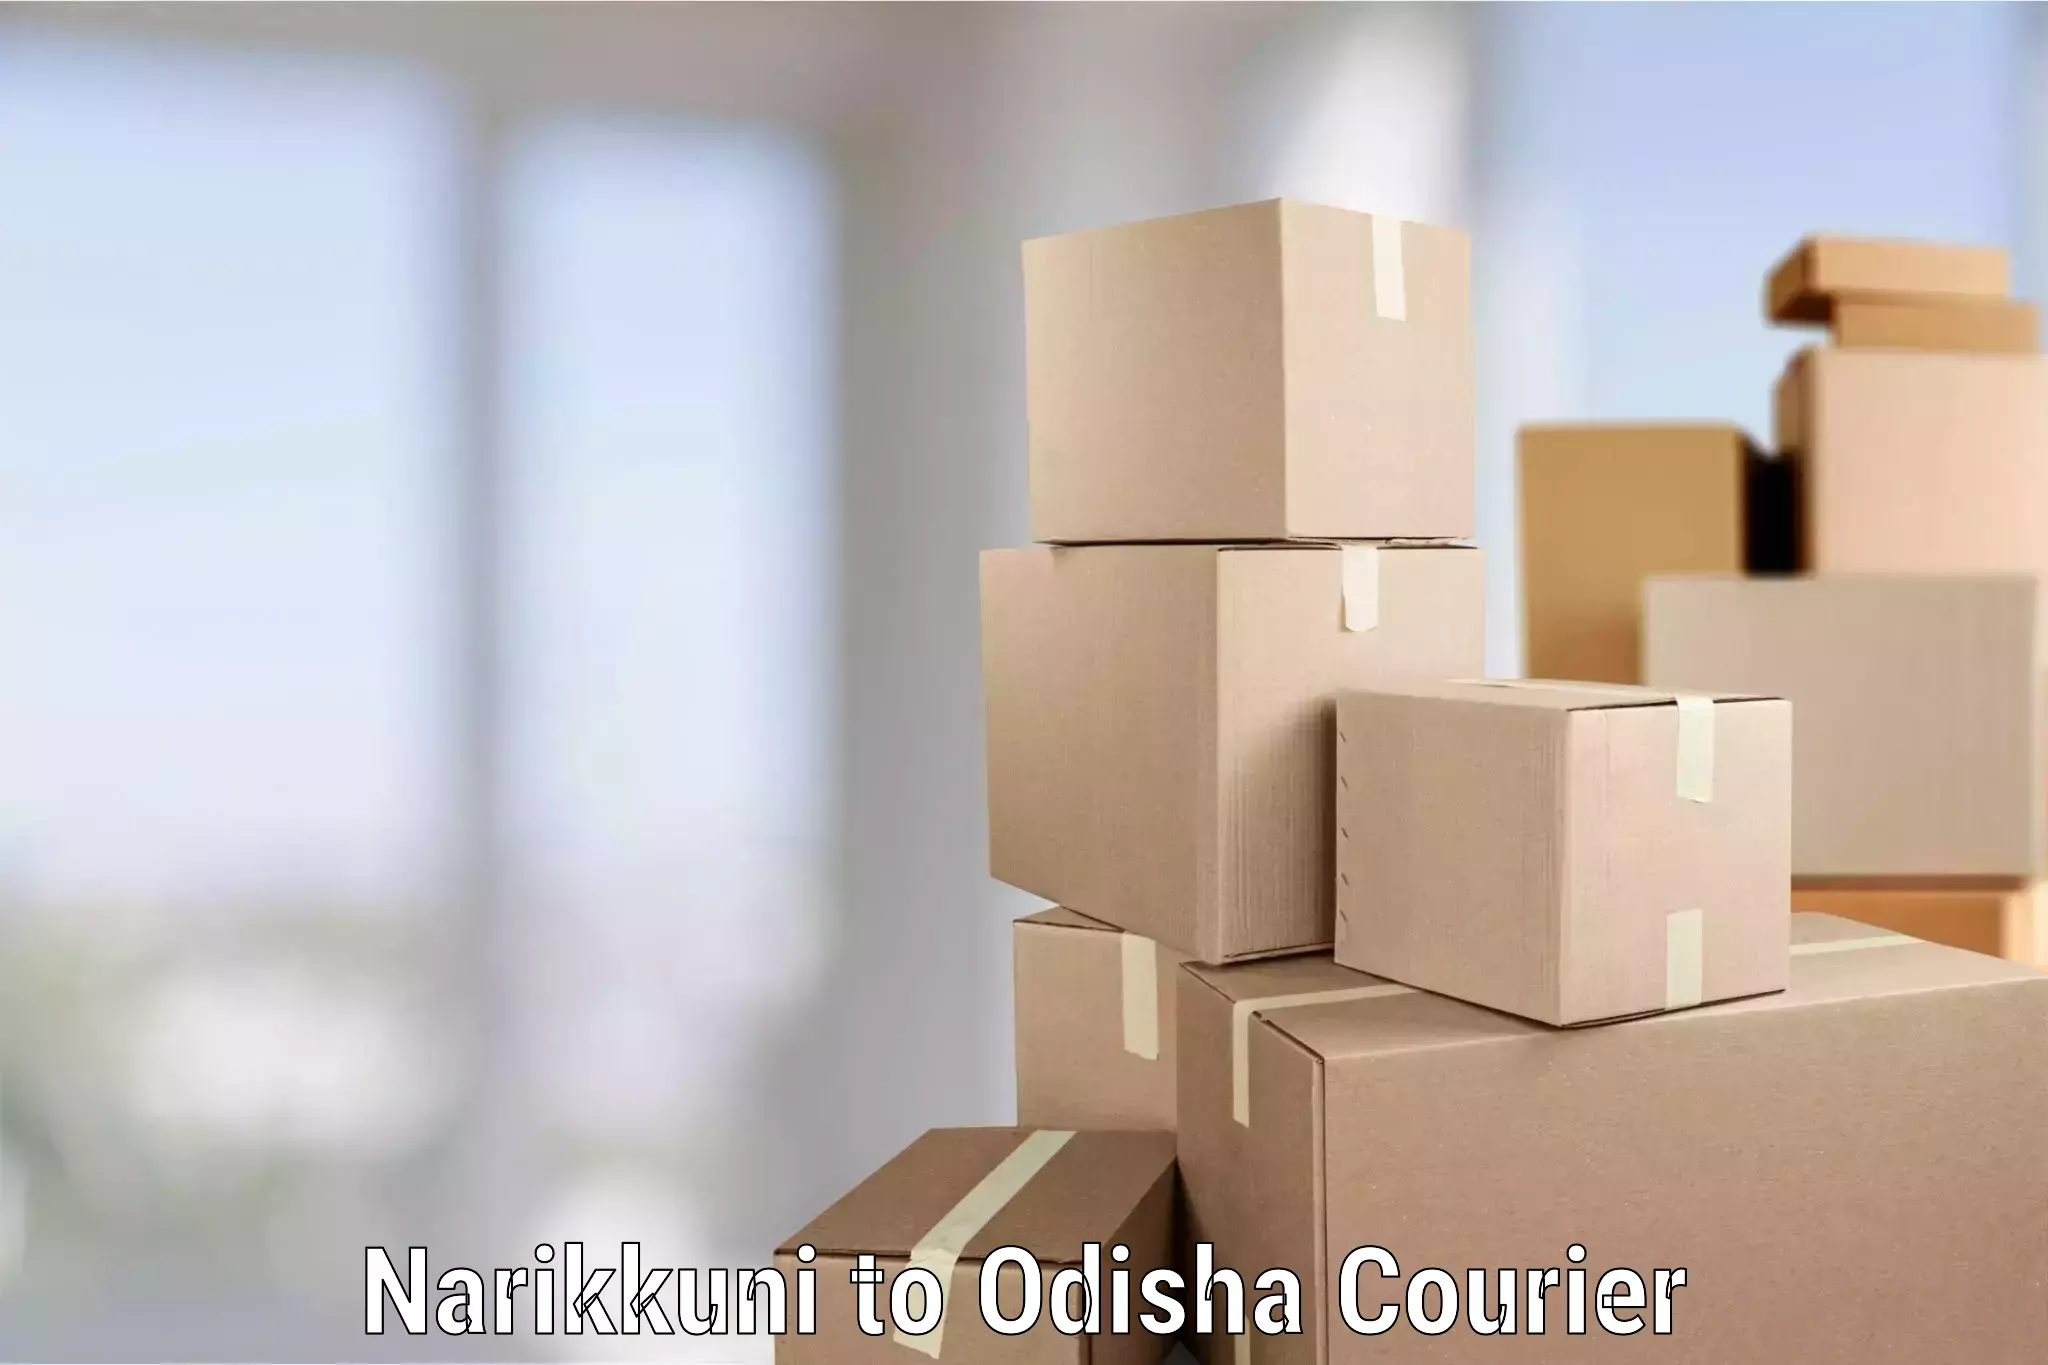 Furniture transport experts Narikkuni to Odisha